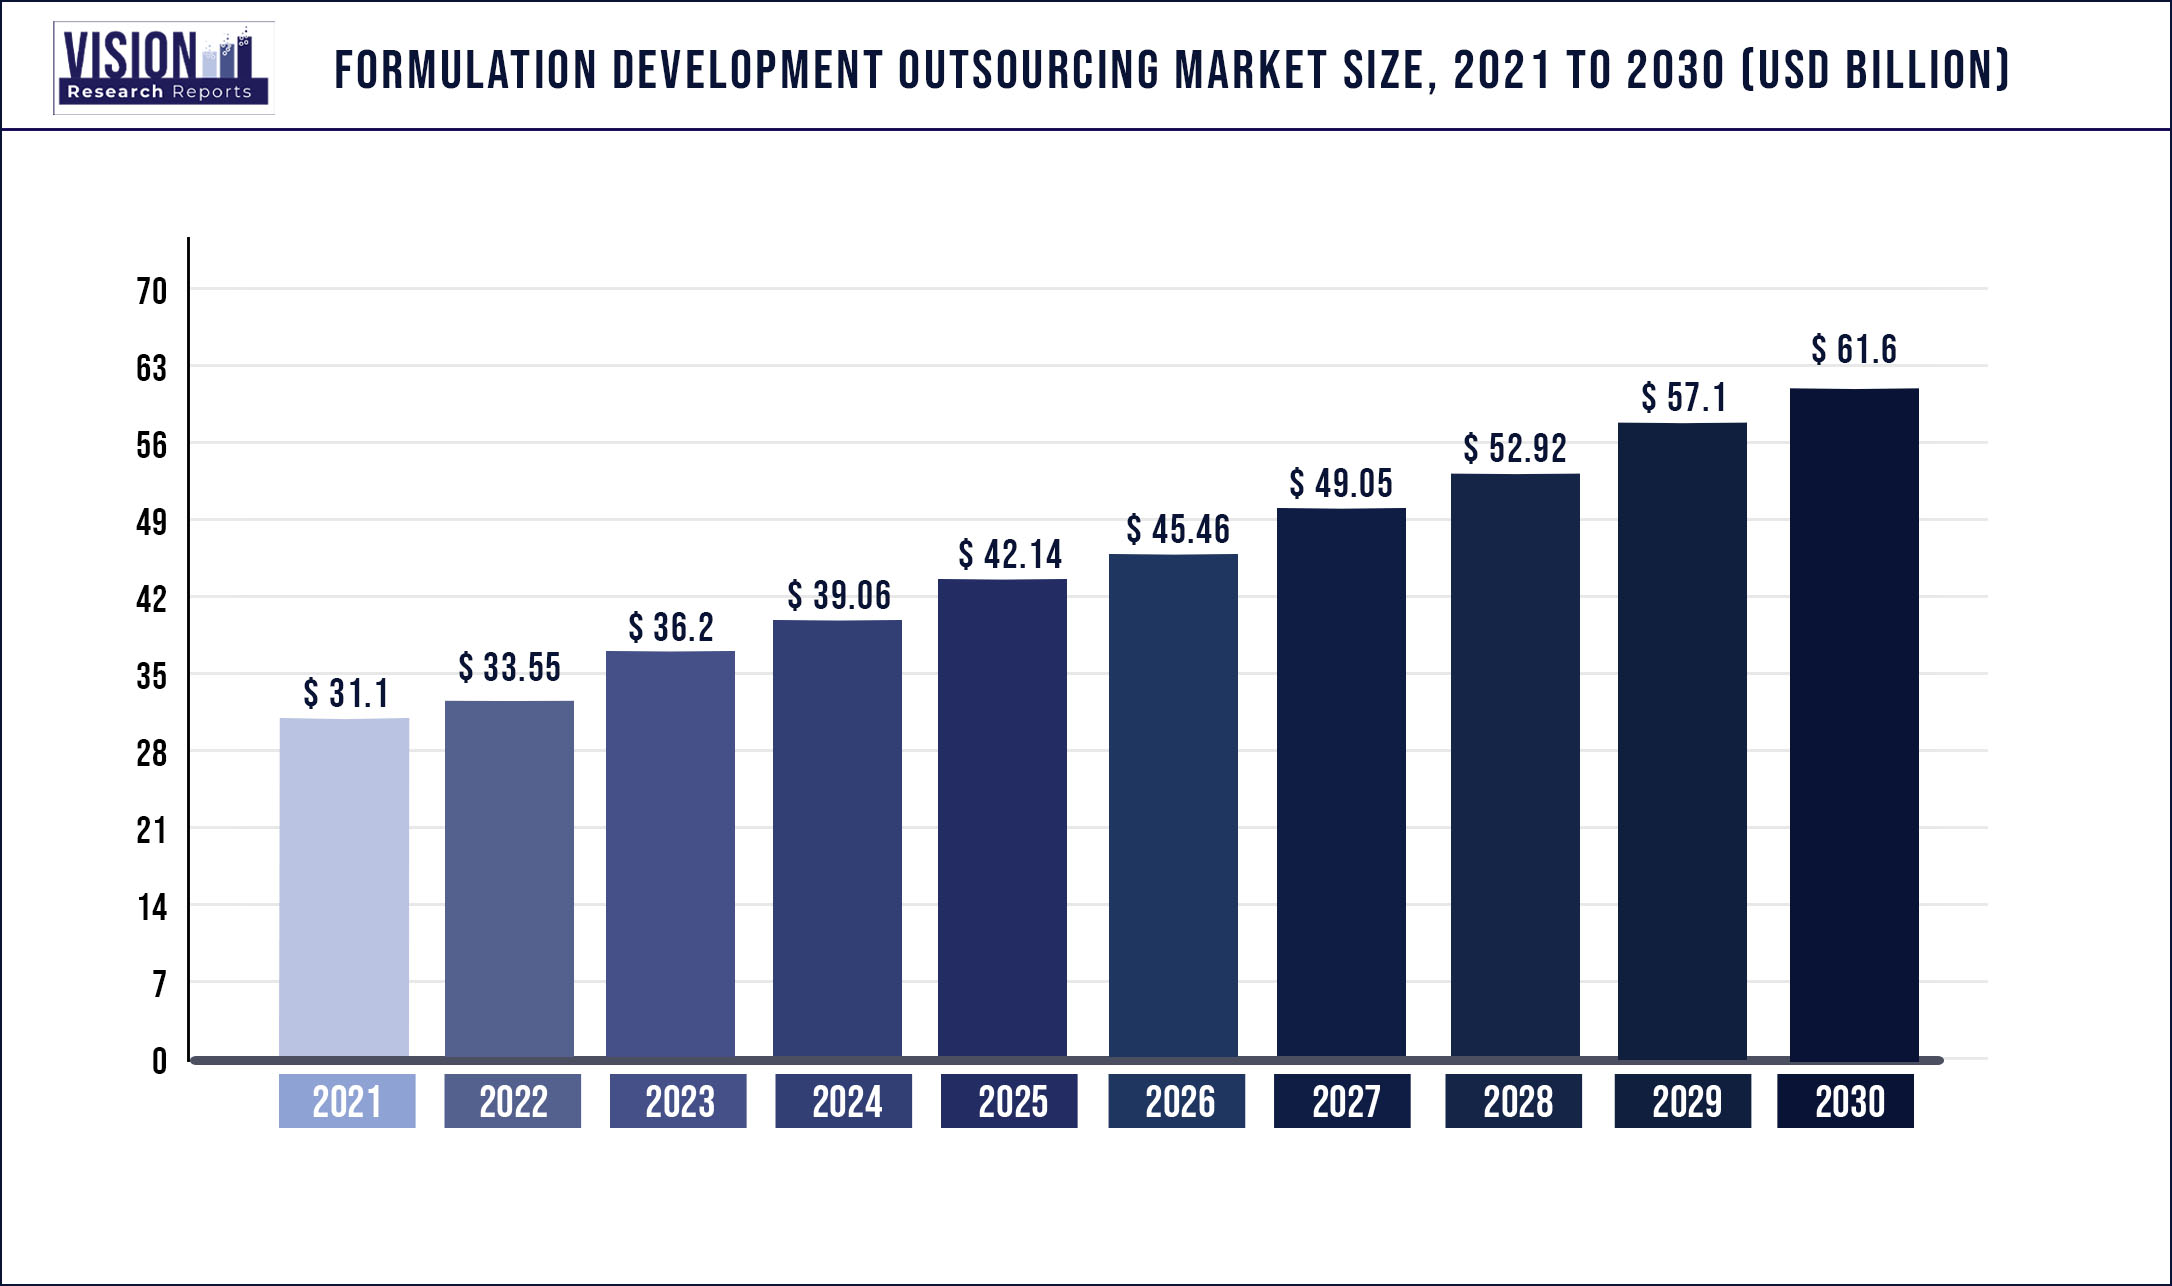 Formulation Development Outsourcing Market Size 2021 to 2030